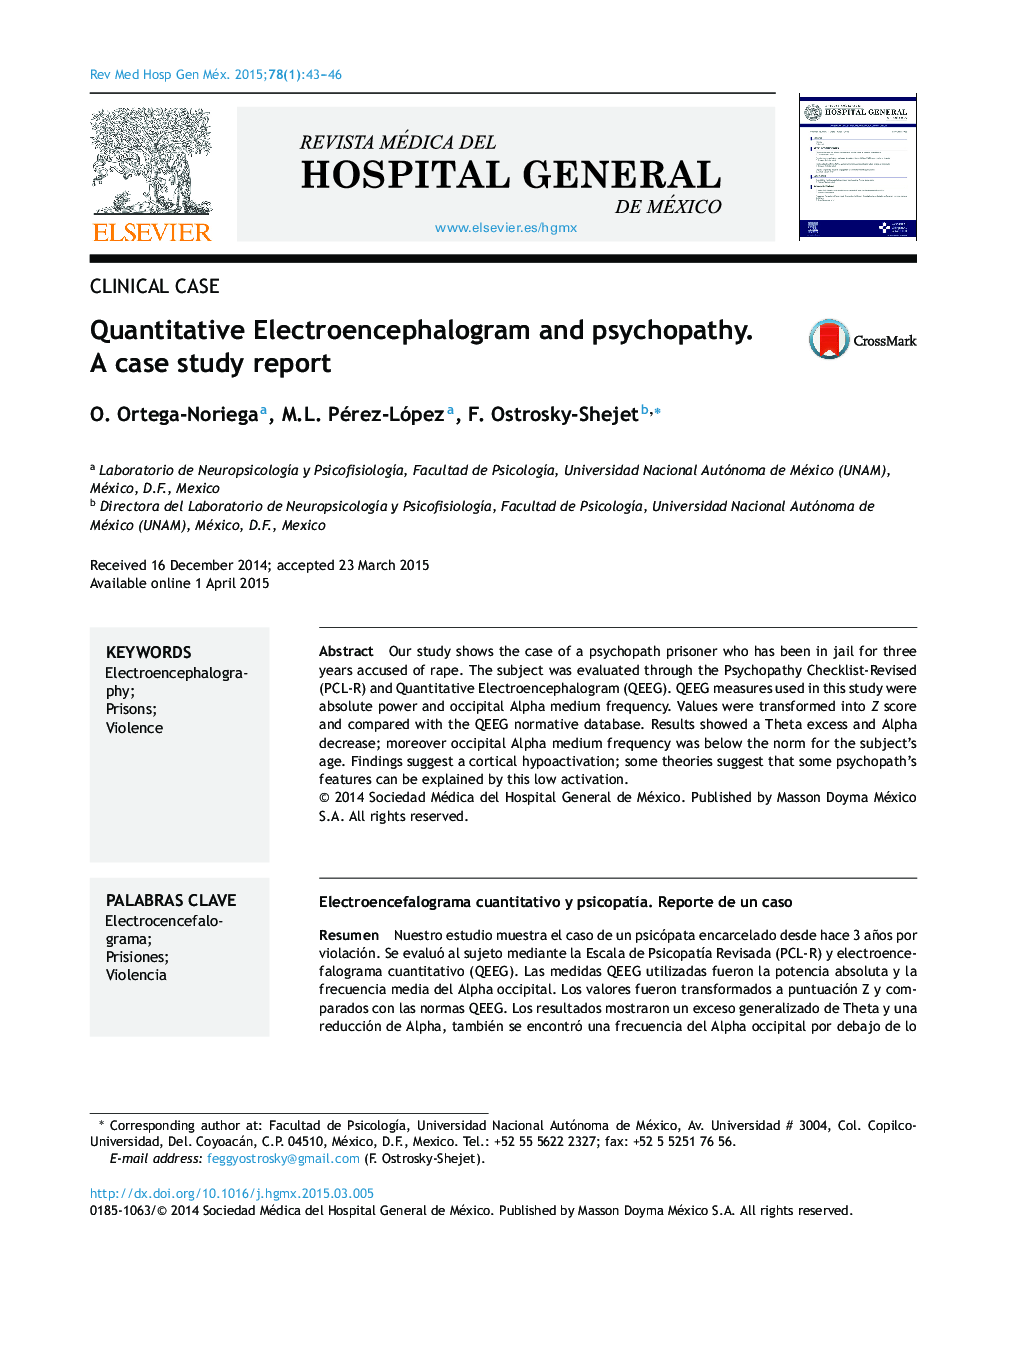 Quantitative Electroencephalogram and psychopathy. A case study report